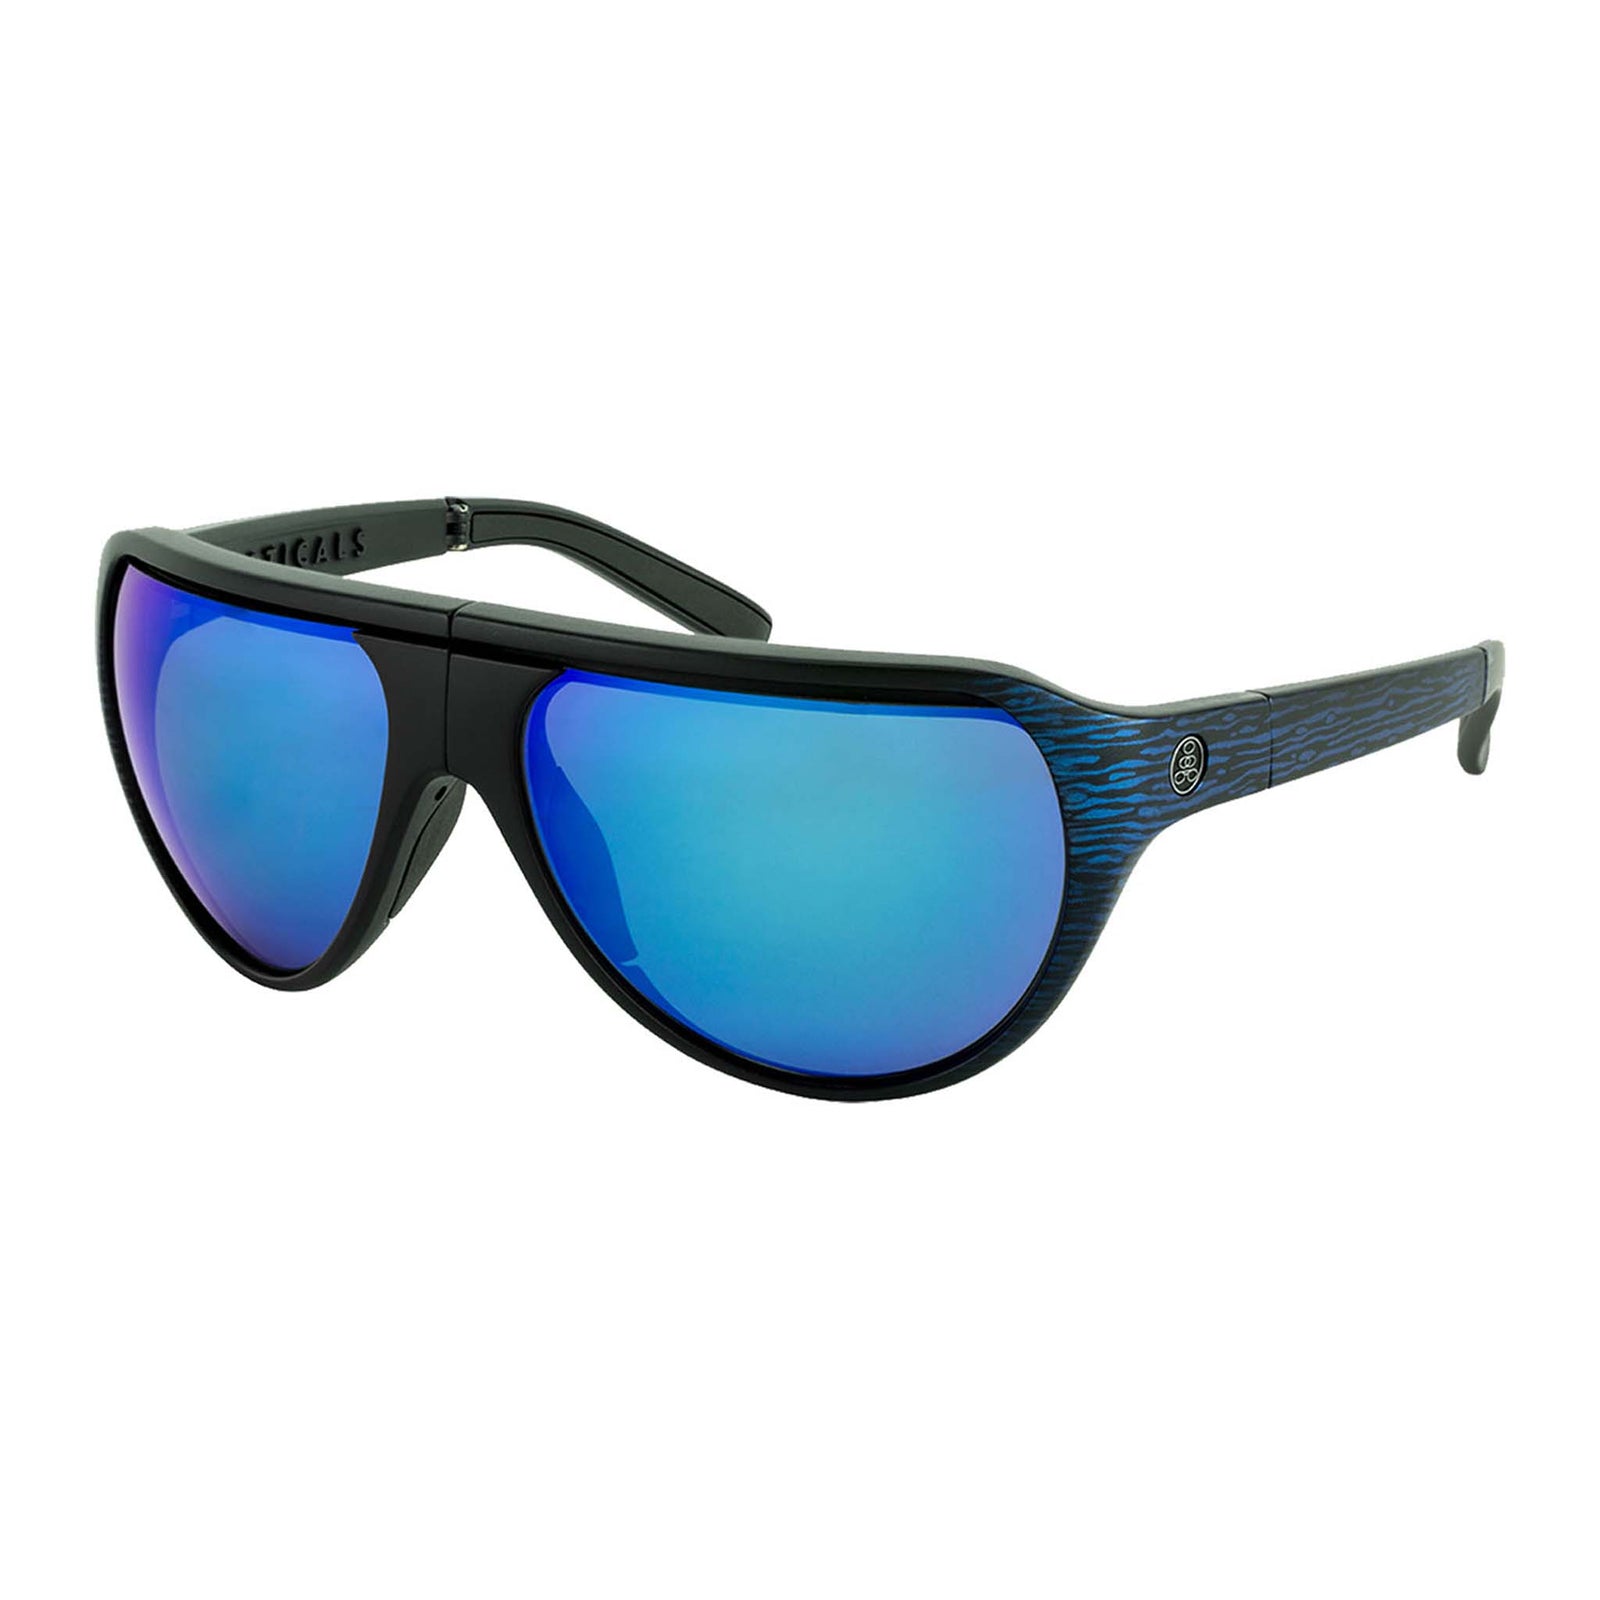 Popticals, Premium Compact Sunglasses, PopAir, 300010-EUUN, Polarized Sunglasses, Matte Blue/Black Wood Grain Frame, Blue Mirror Lenses, Glam View